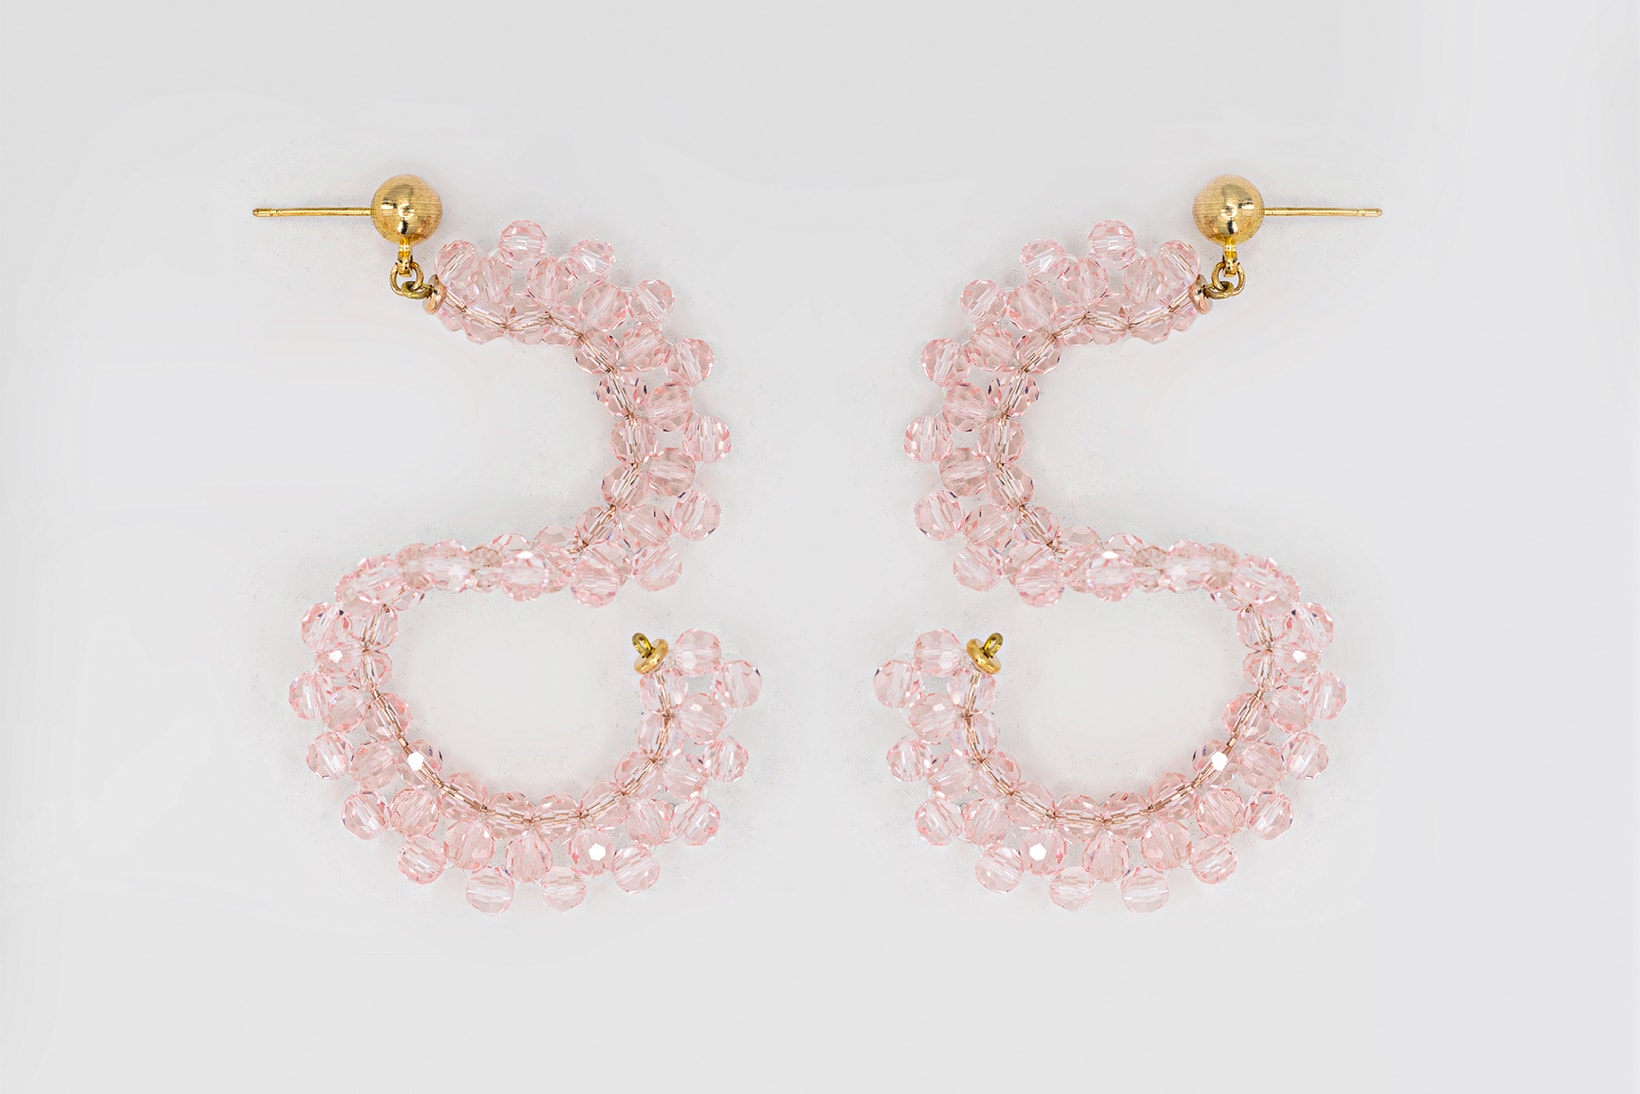 scho studio minju kim spring summer 2021 collection jewelry necklaces earrings custom seoul south korea